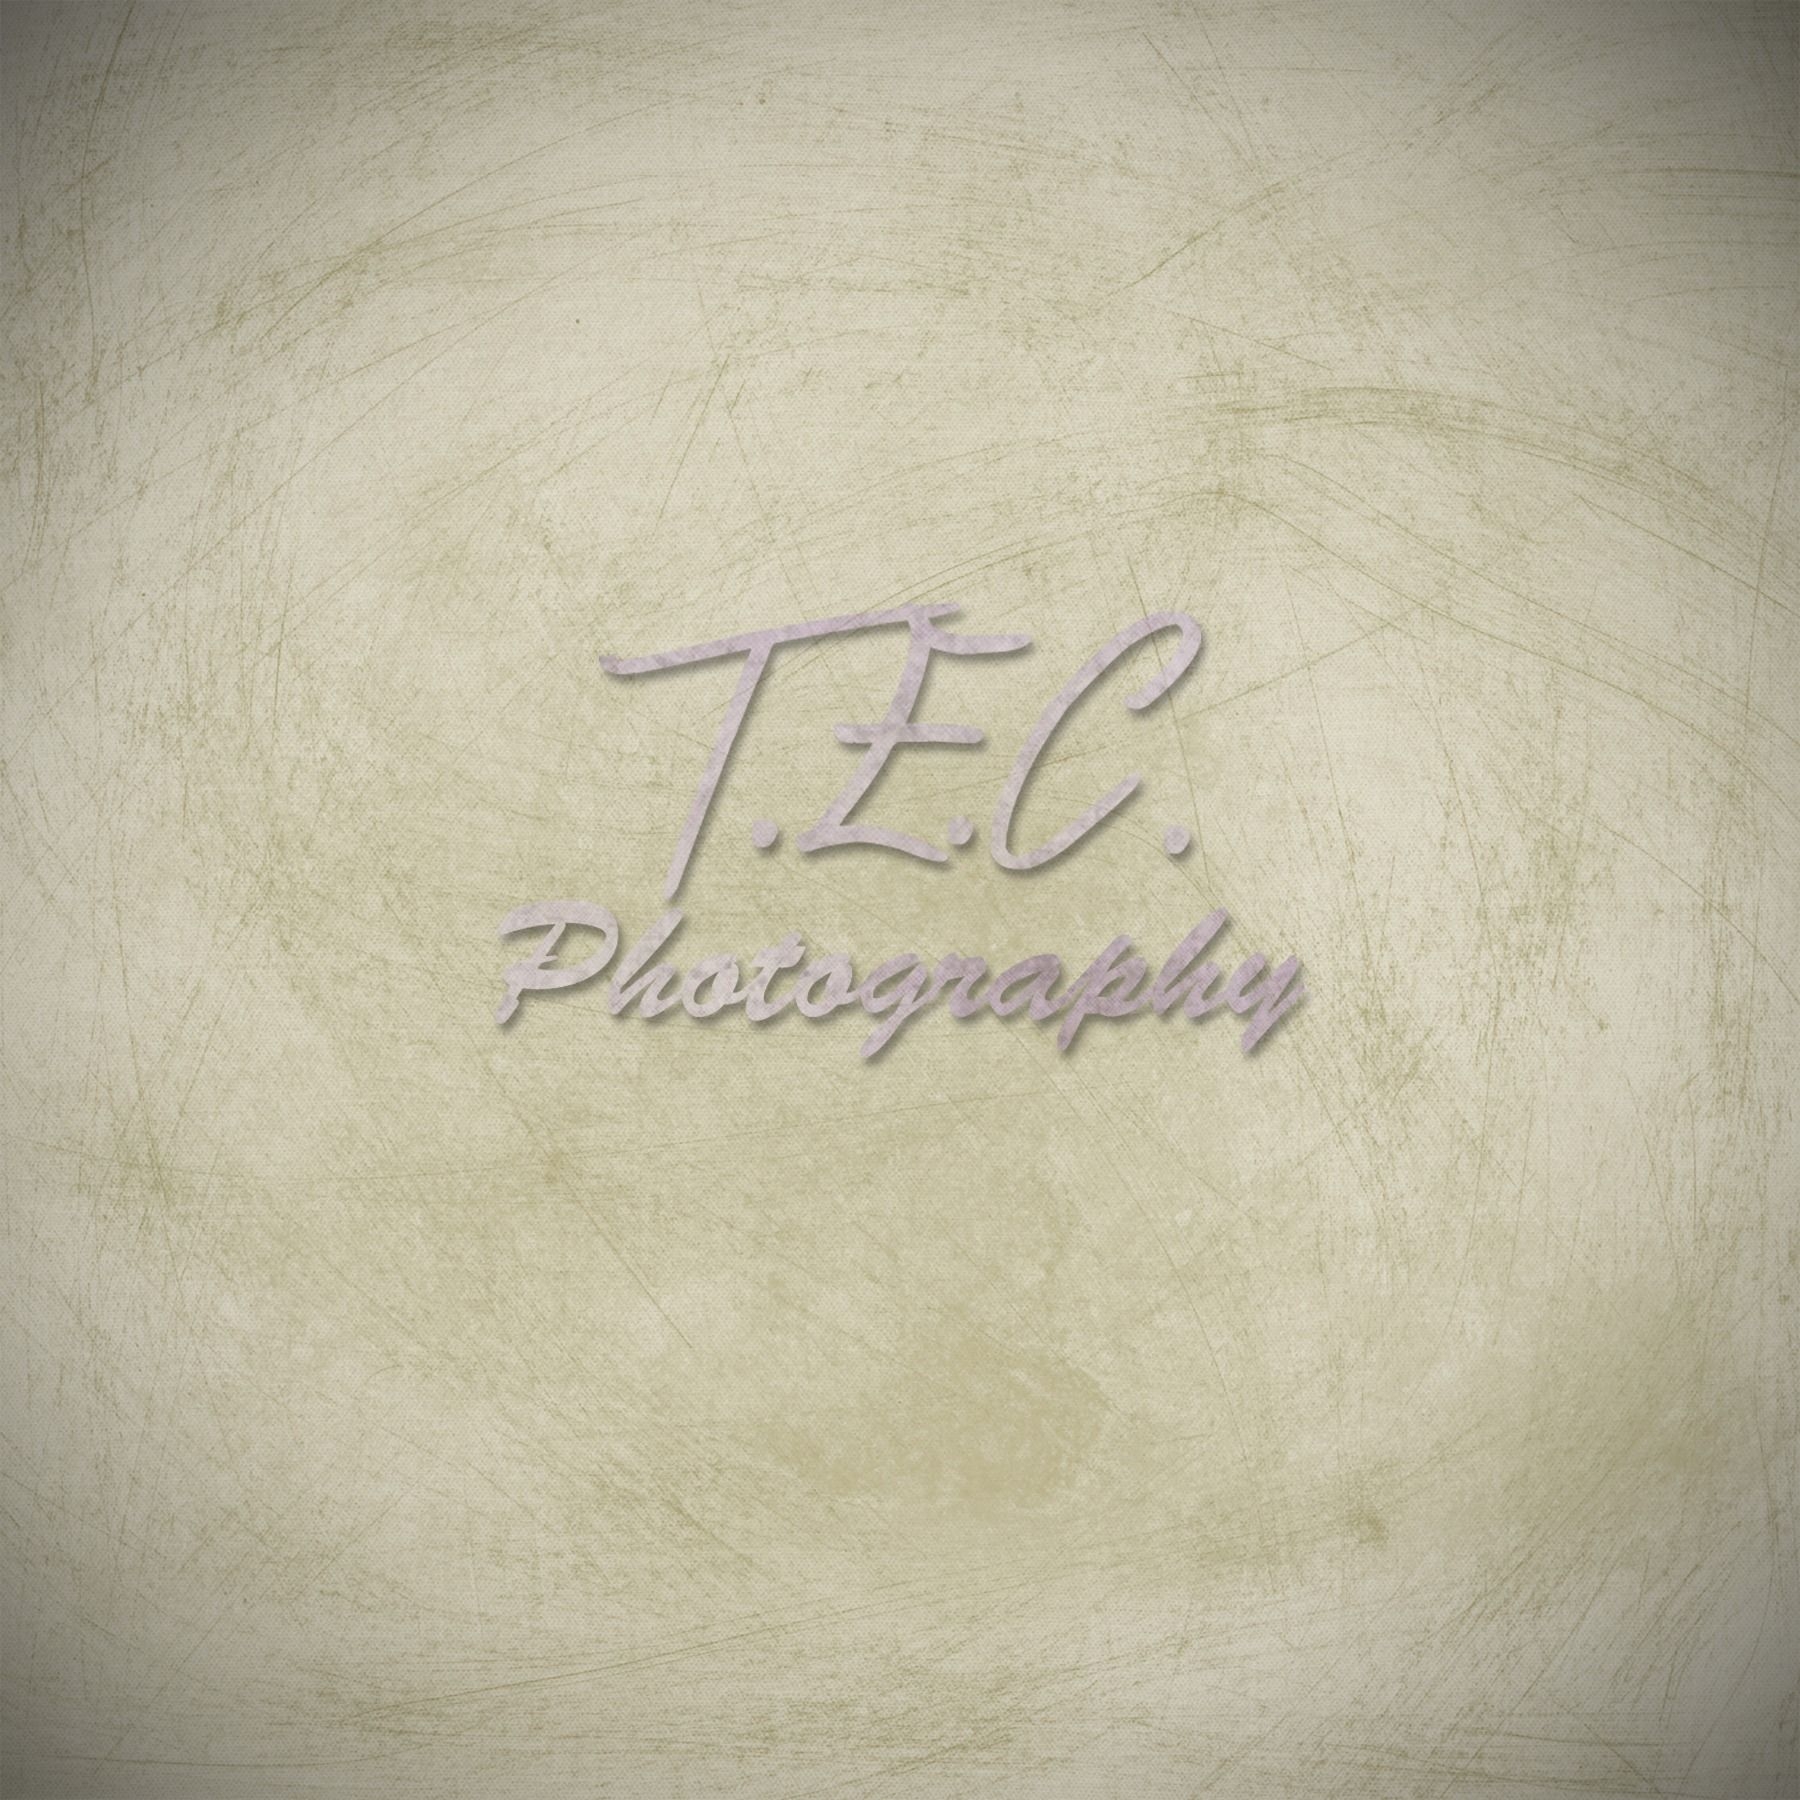 T.E.C Photography